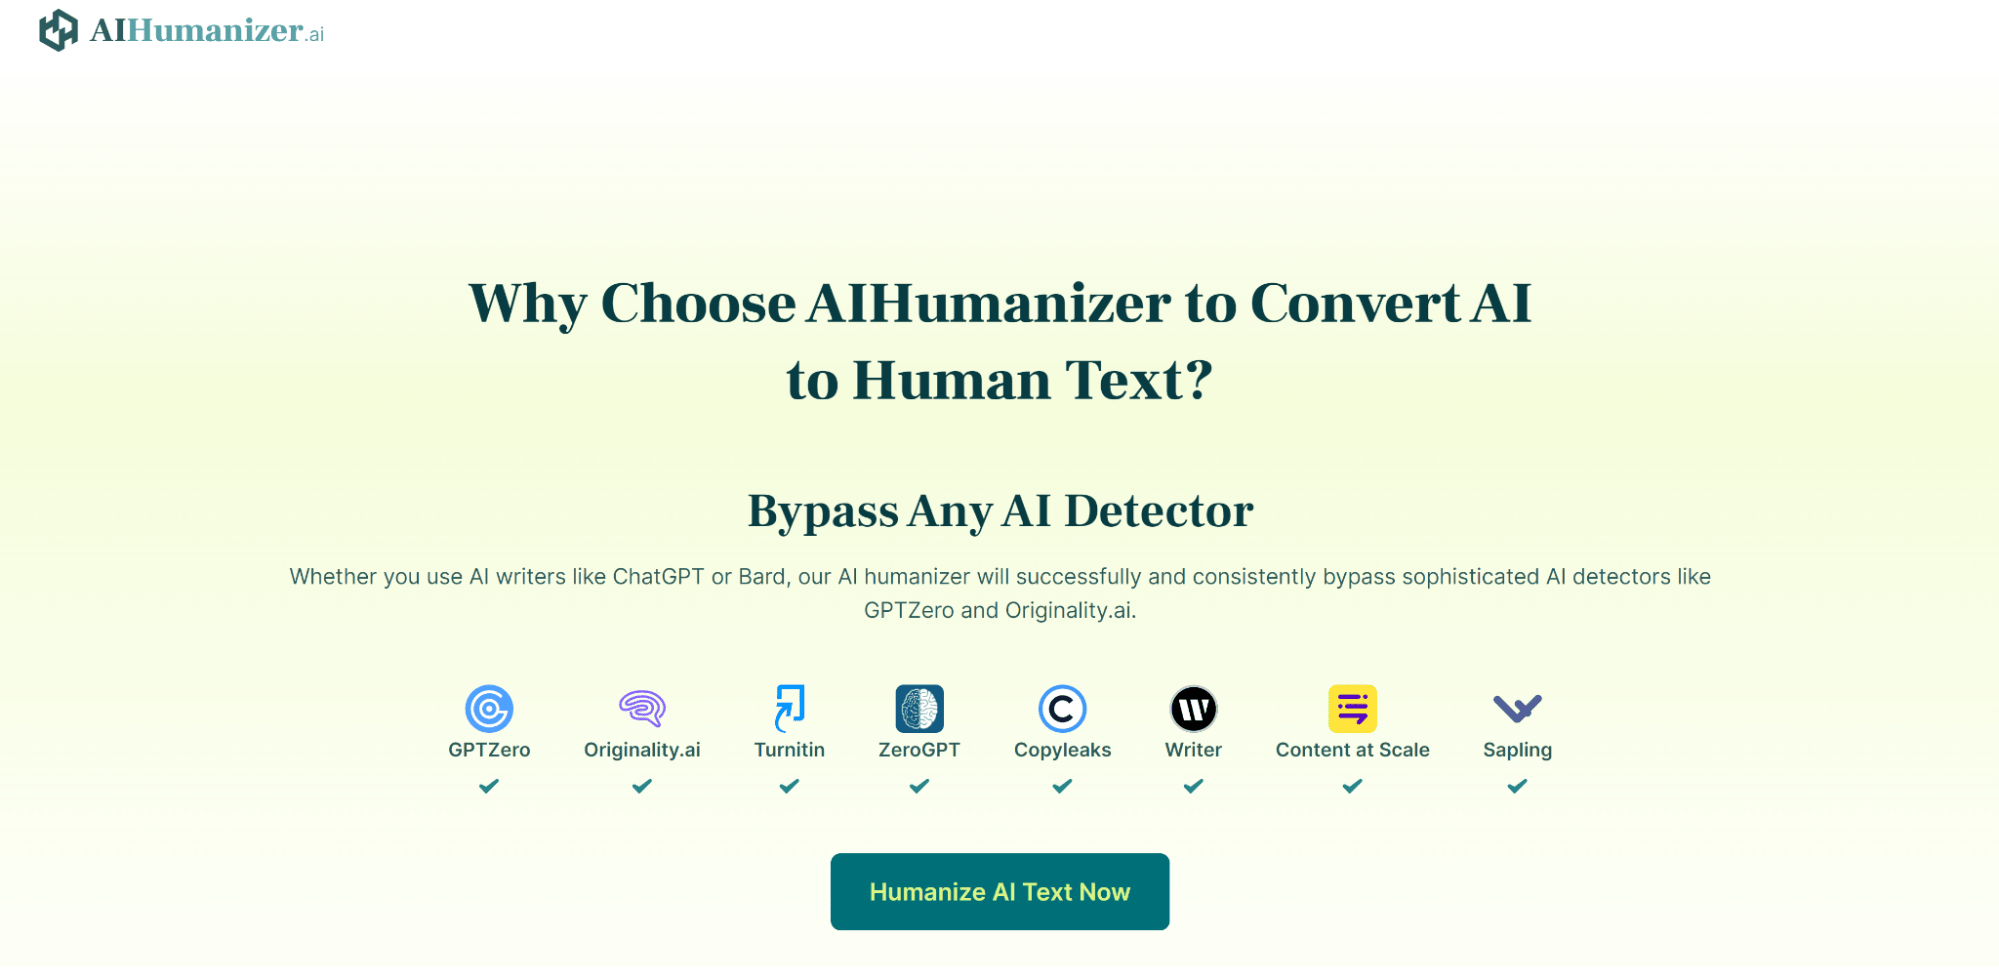 Why Choose AI Humanizer